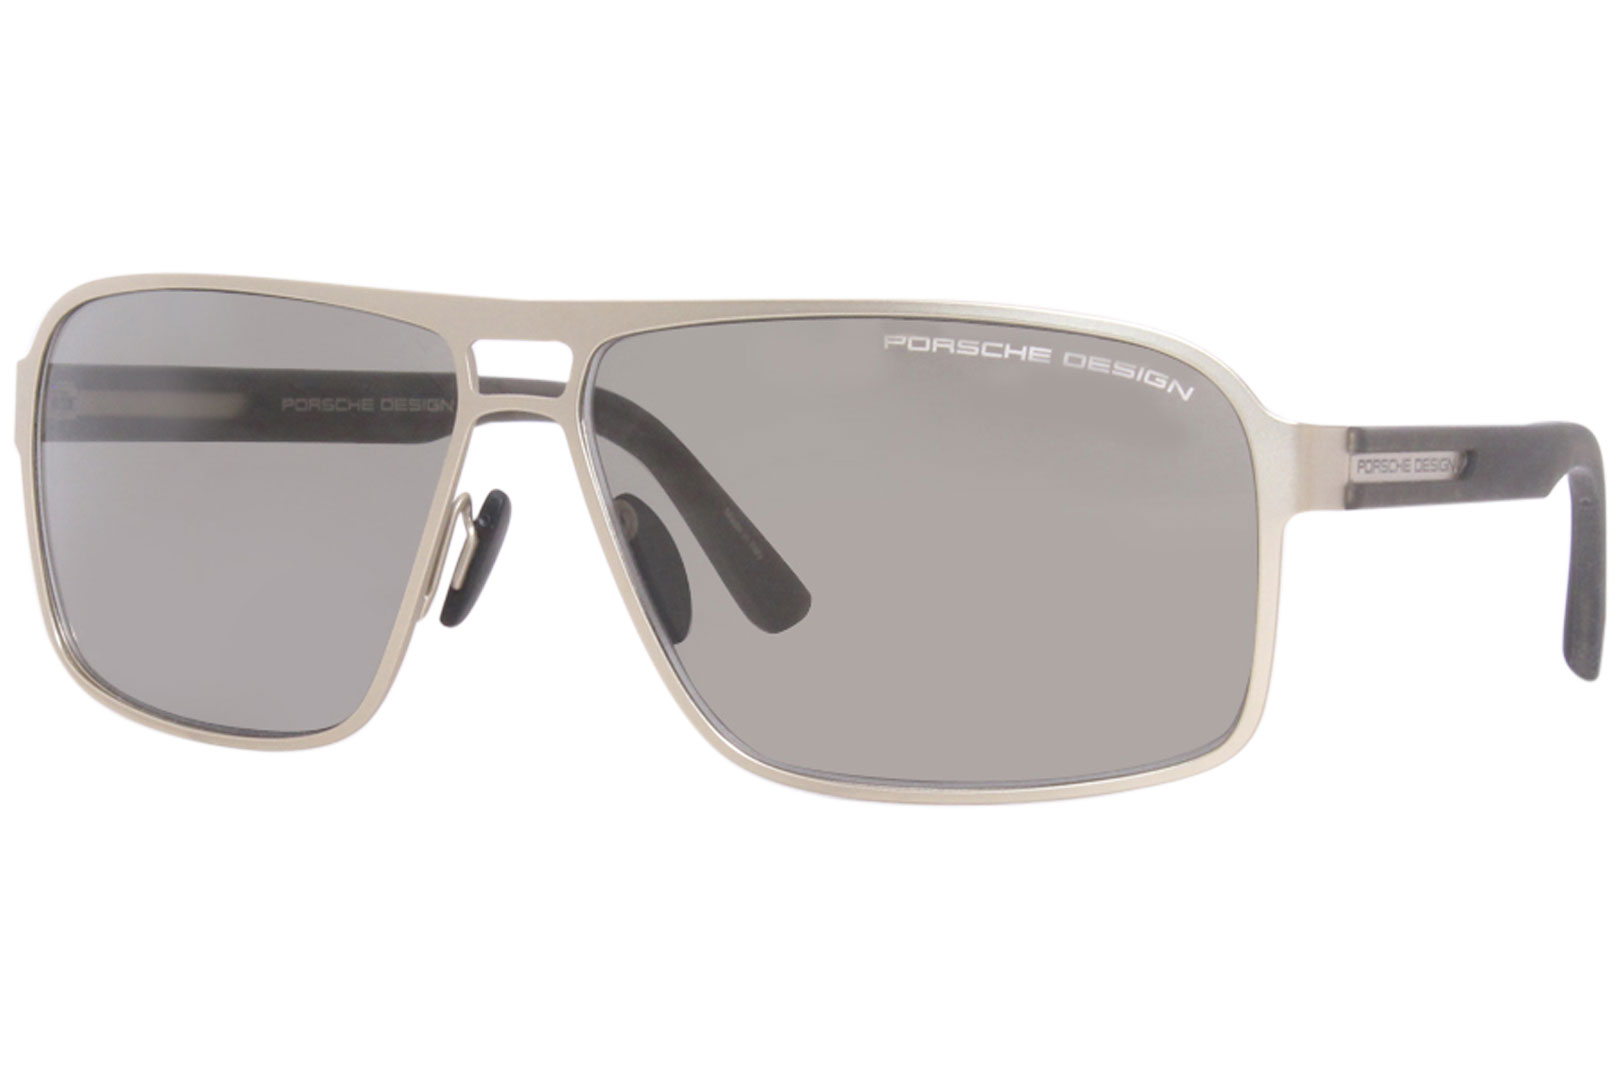 Porsche Design Men's Sunglasses | EyeSpecs.com